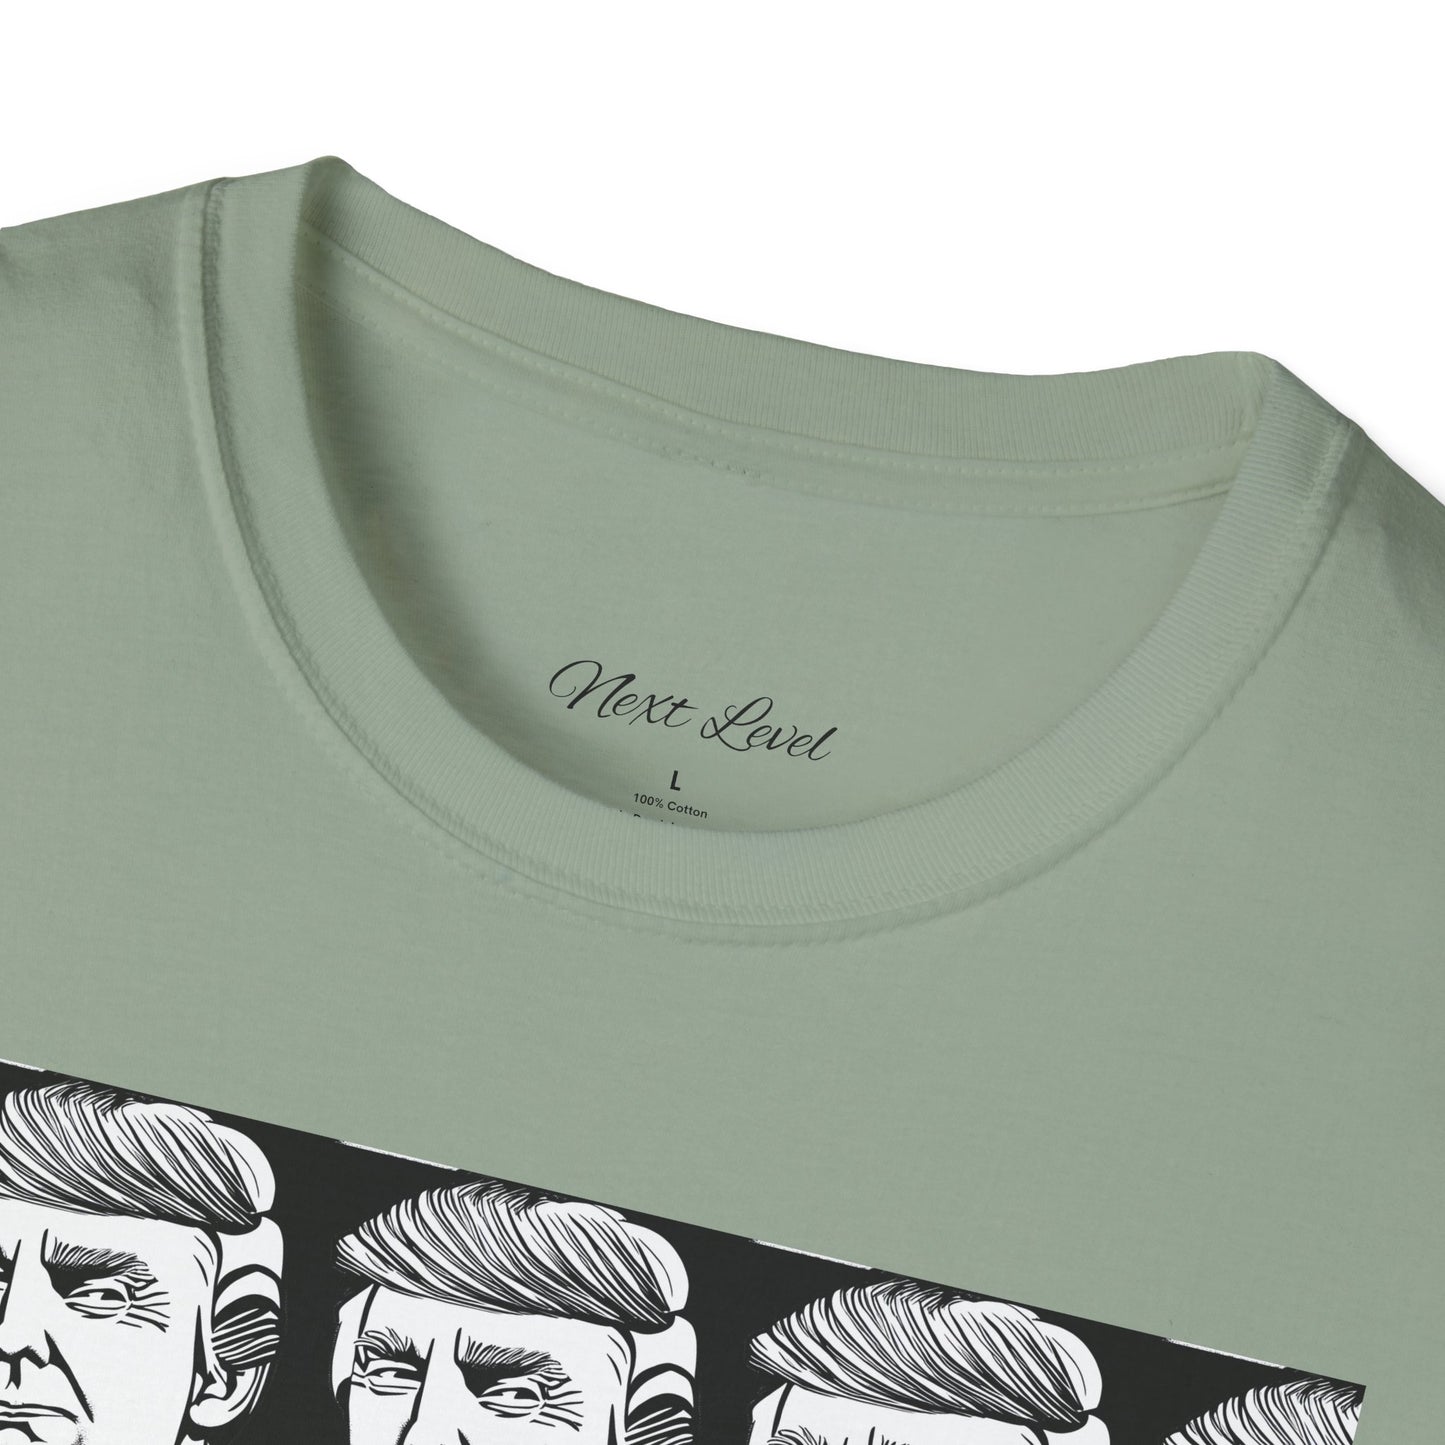 President Trump style t-shirt 2024